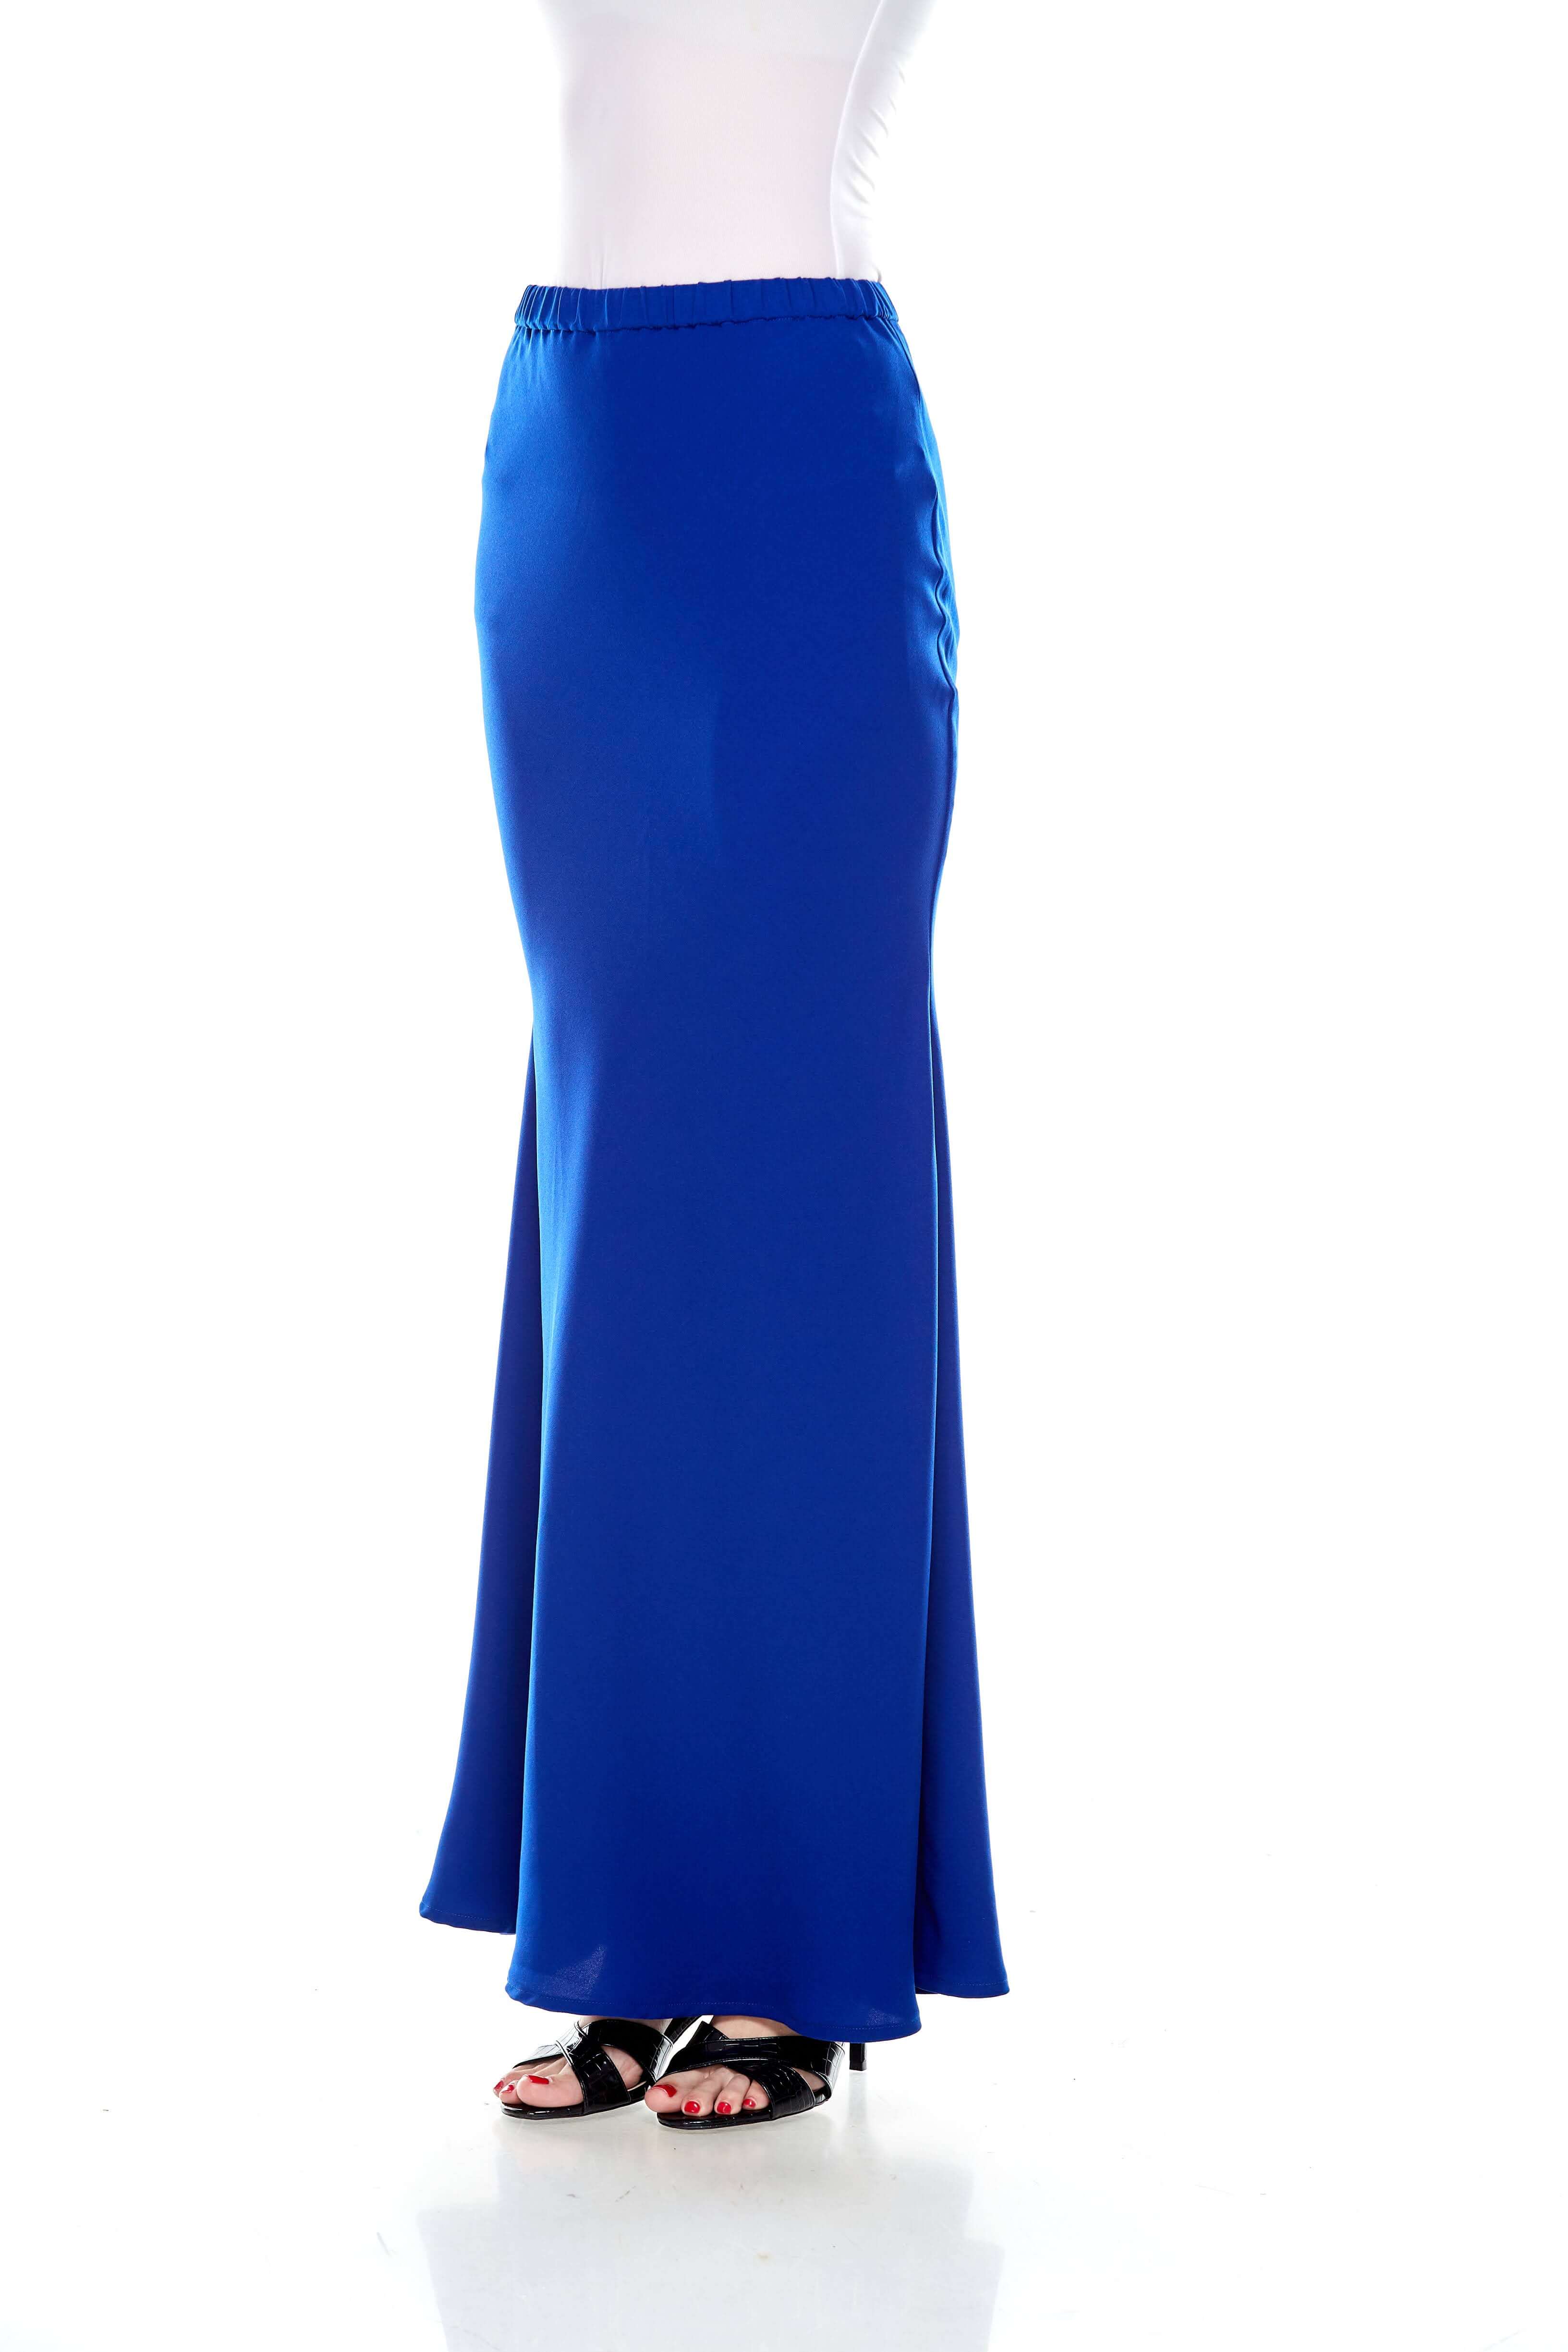 Royal Blue Mermaid Skirt (3)